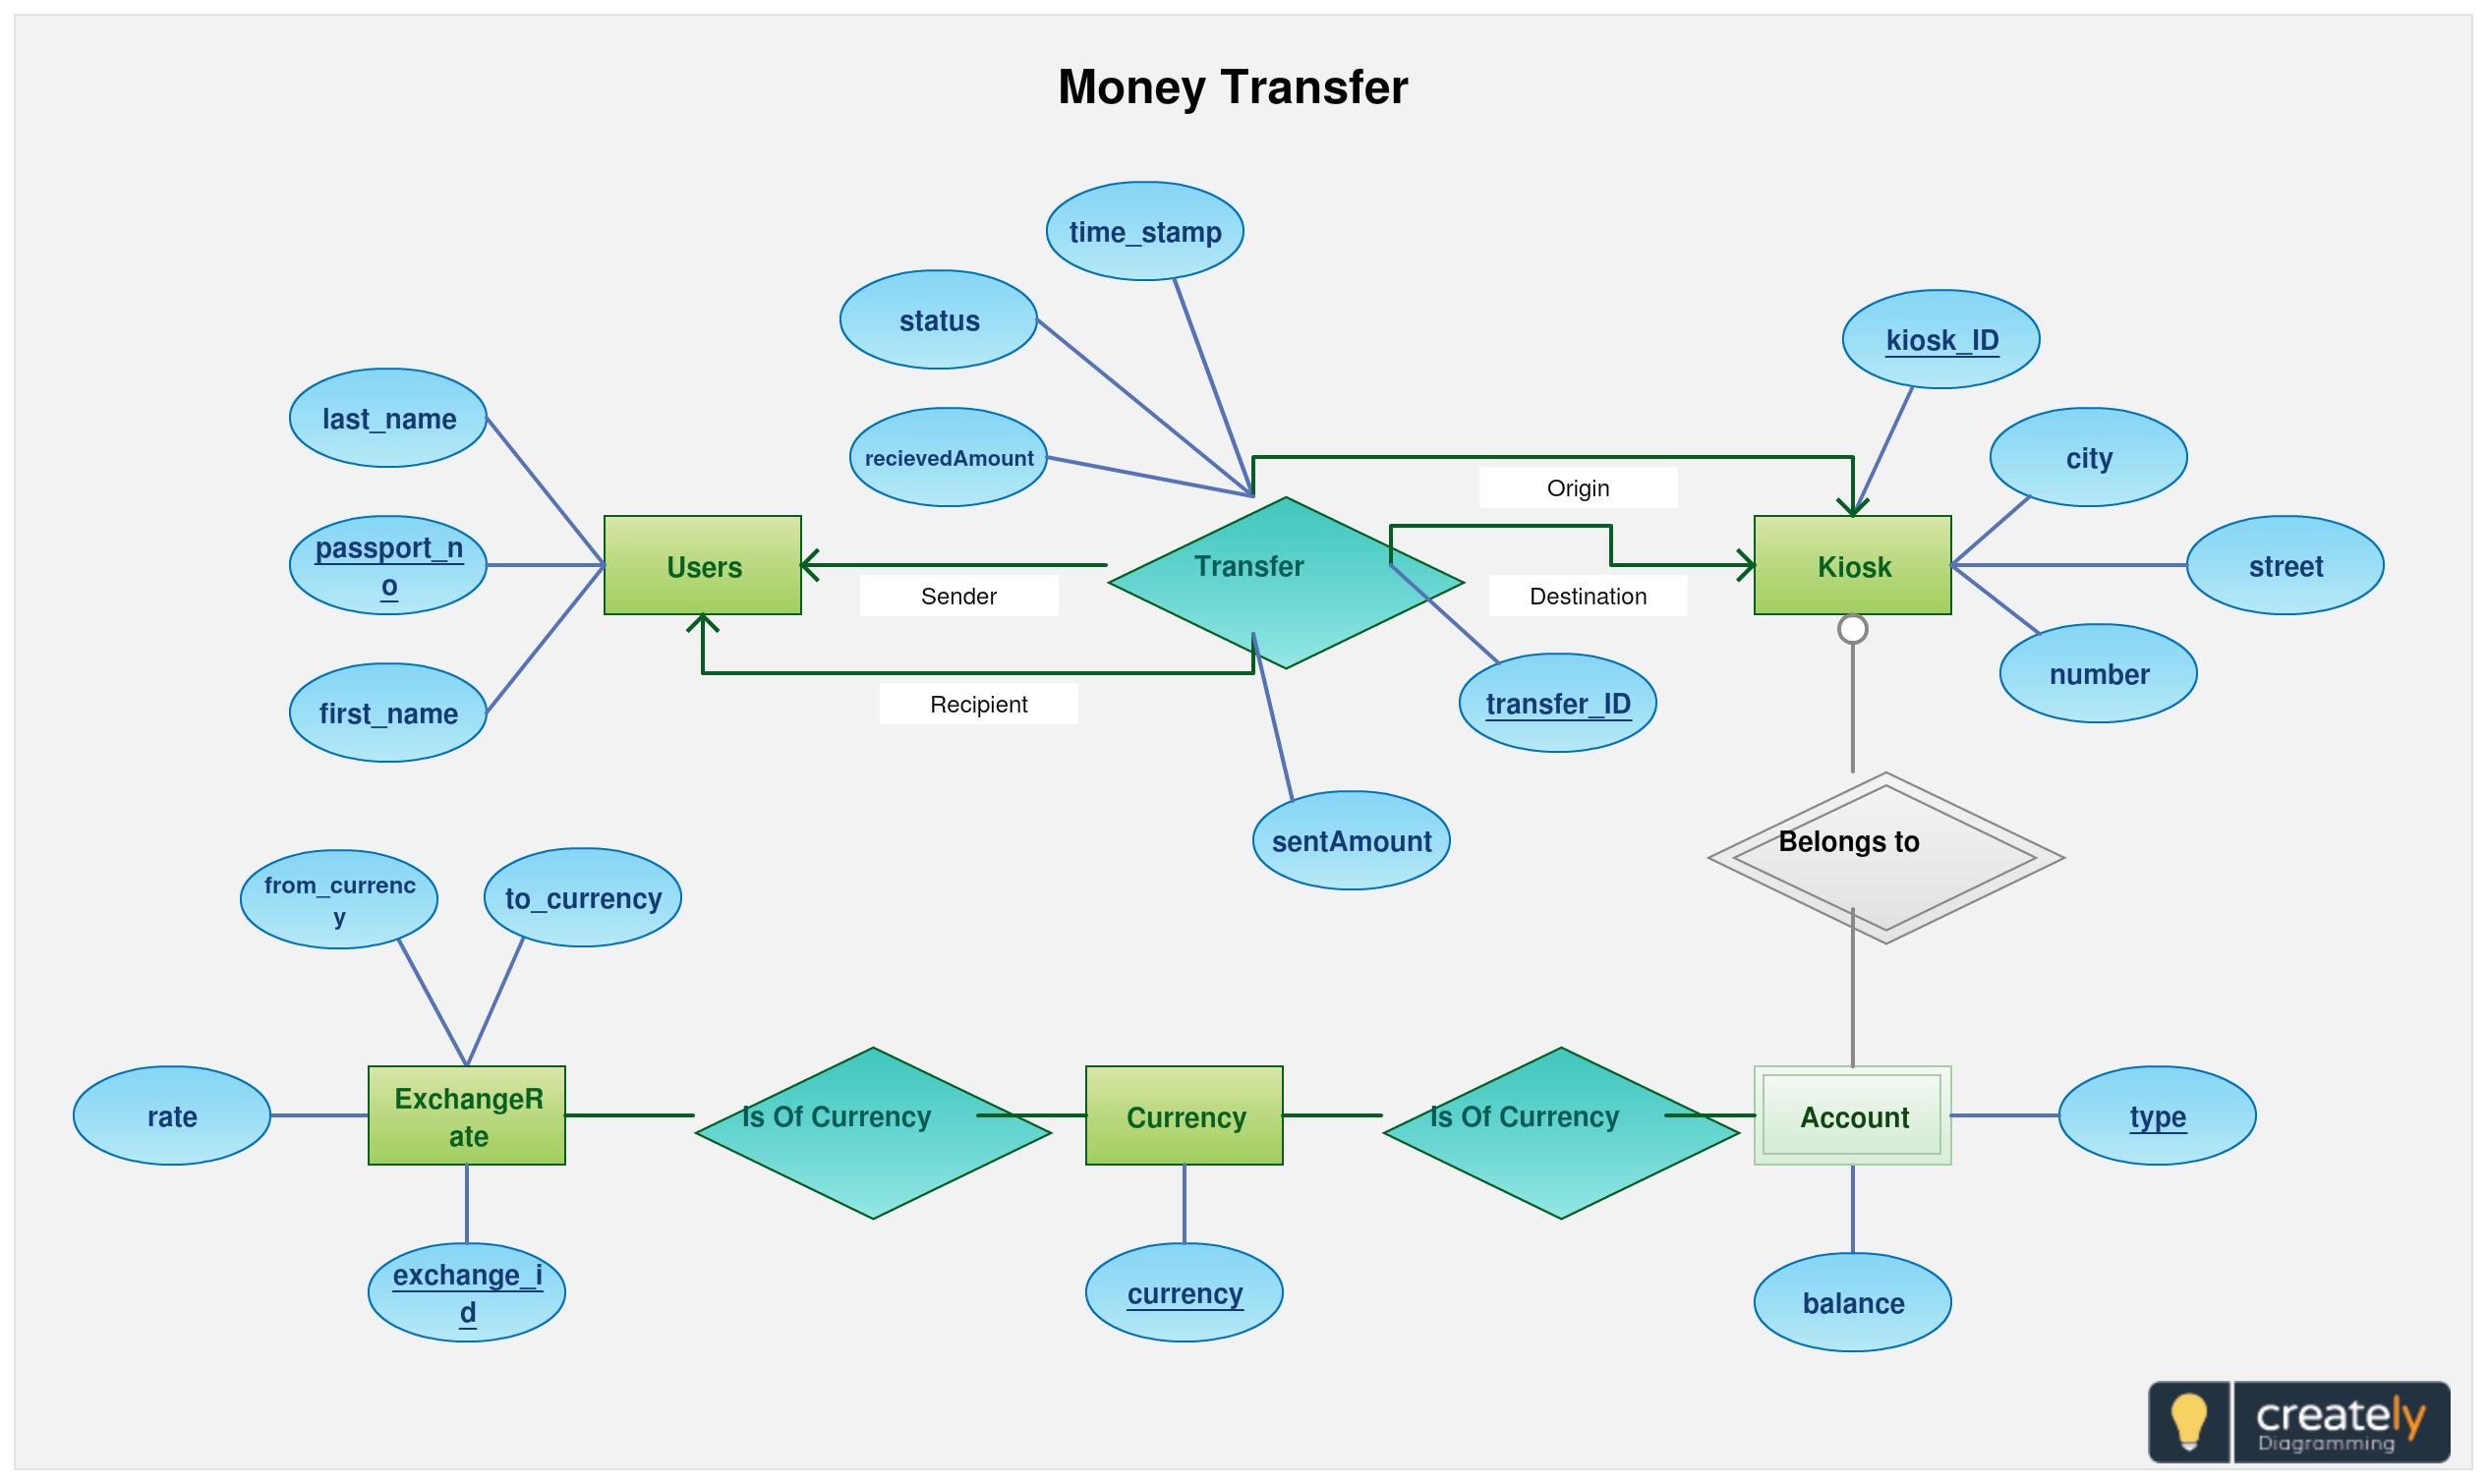 Entity Relationship Diagram Of Fund Transfer - Use This intended for Entity Relationship Diagram